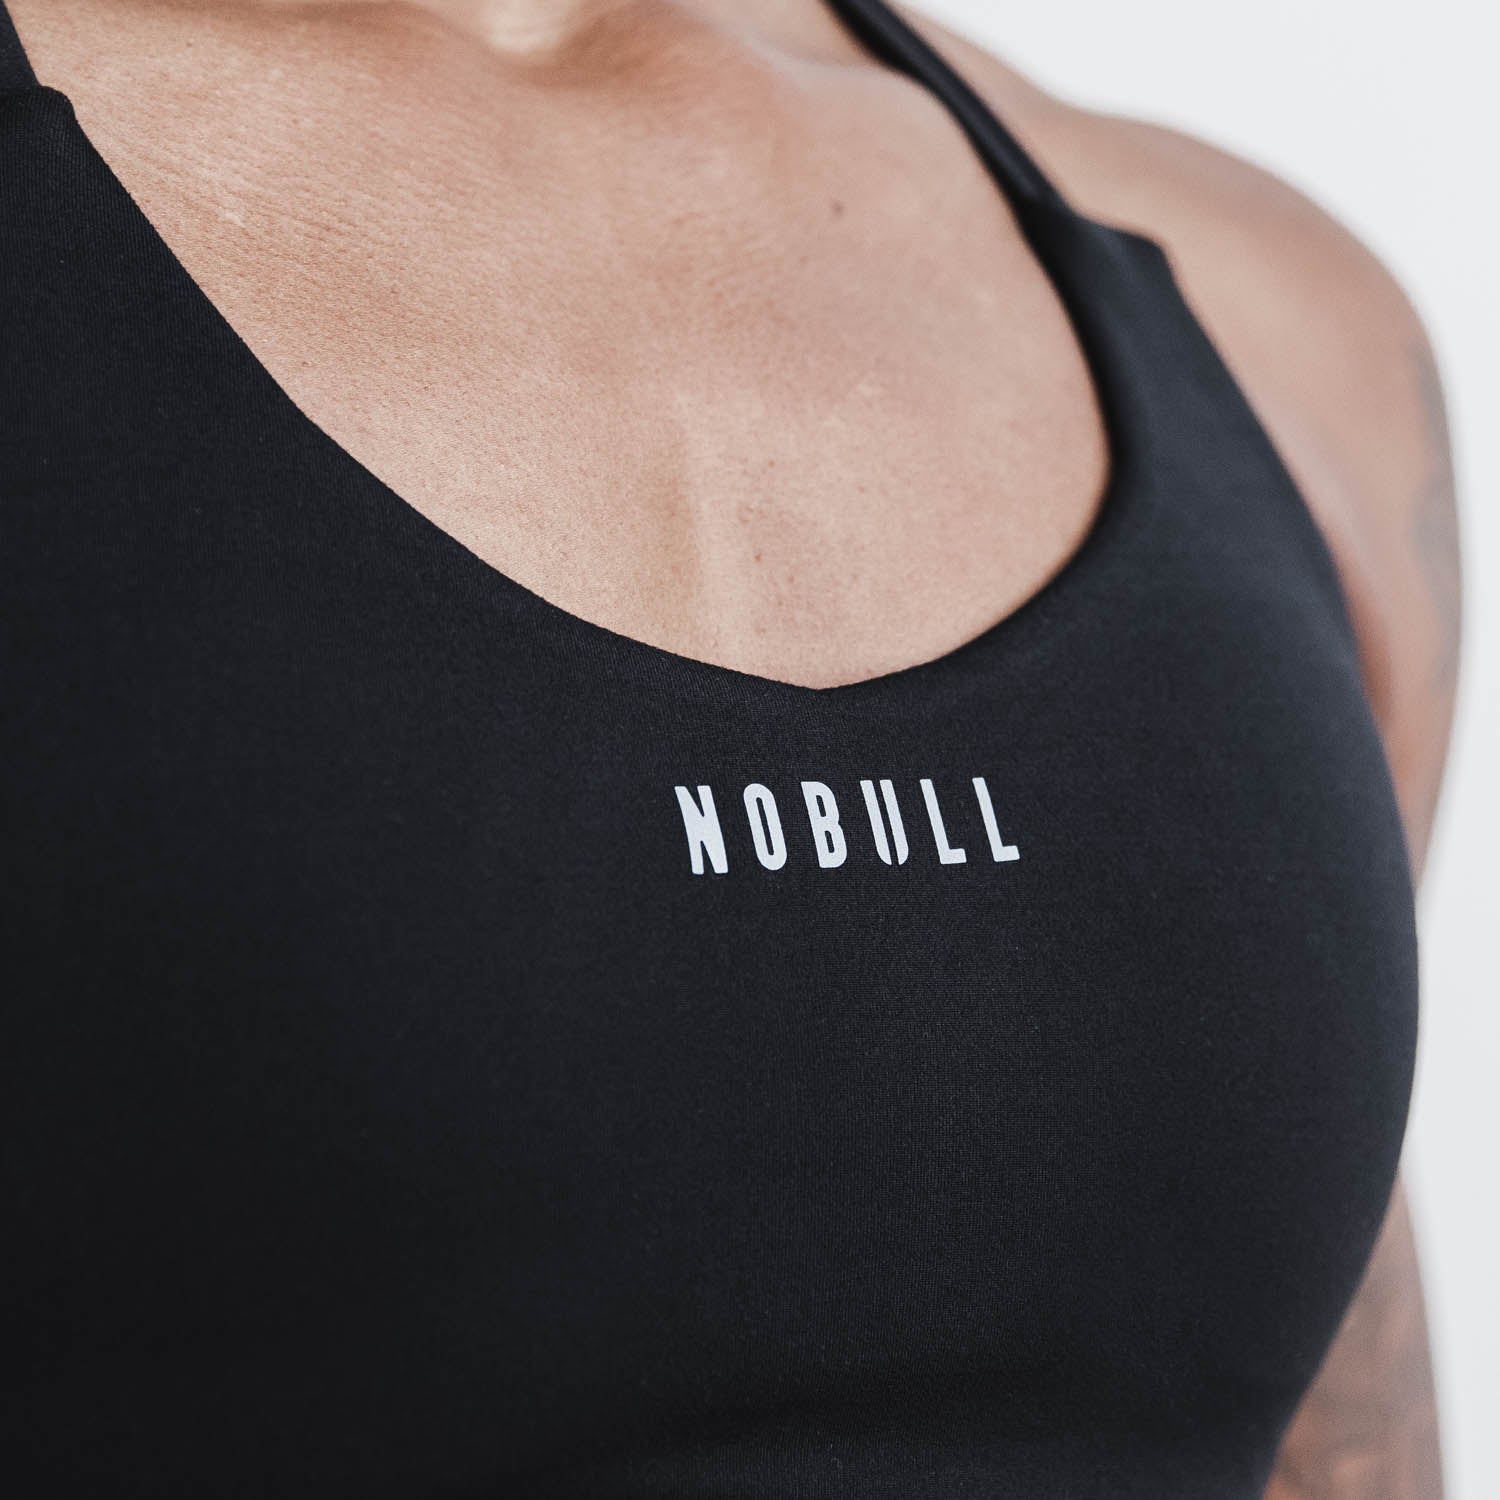 NoBull sports bras - Athletic apparel